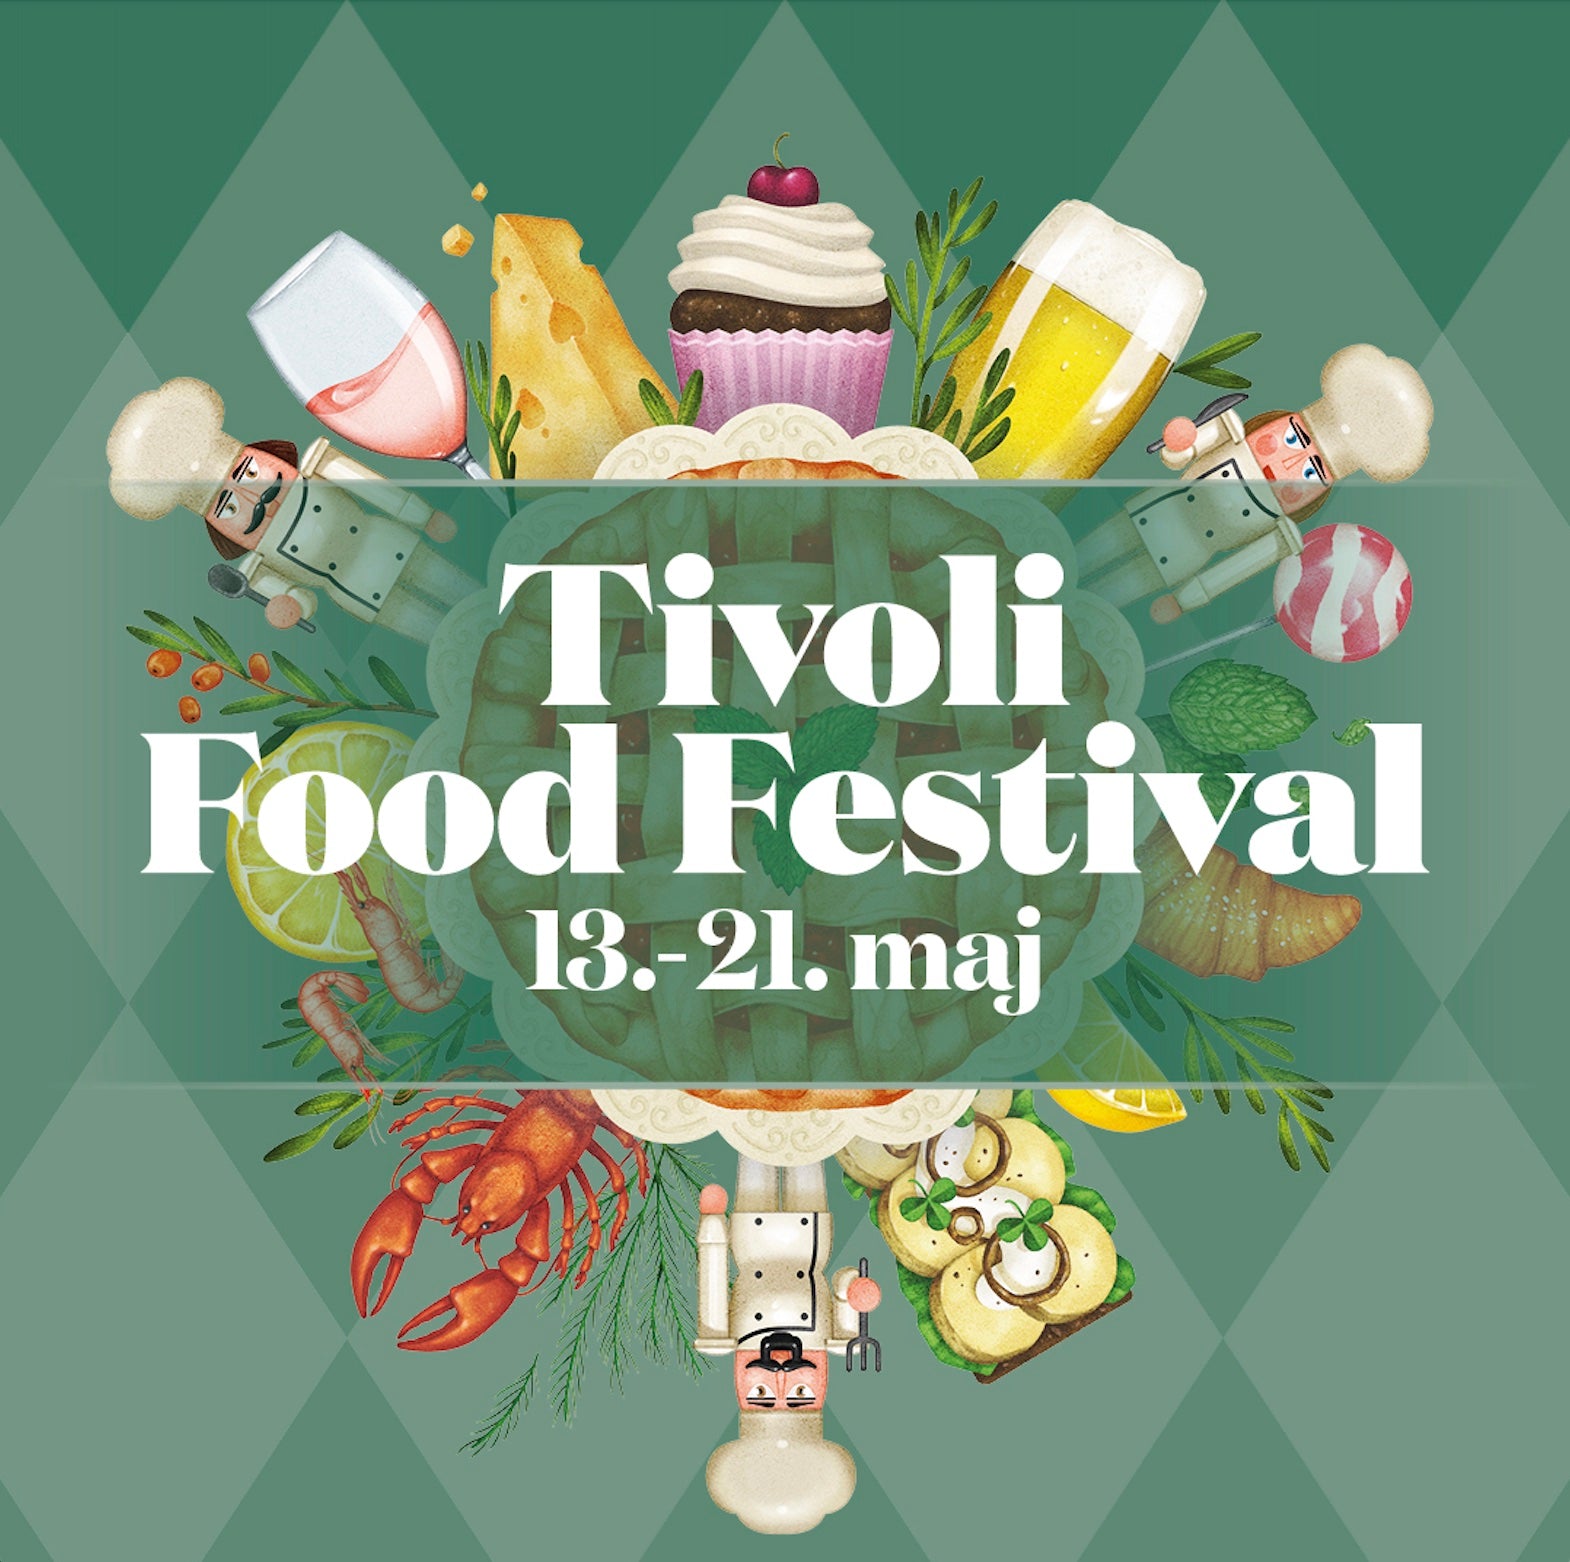 Tivoli Food Festival [Contract]